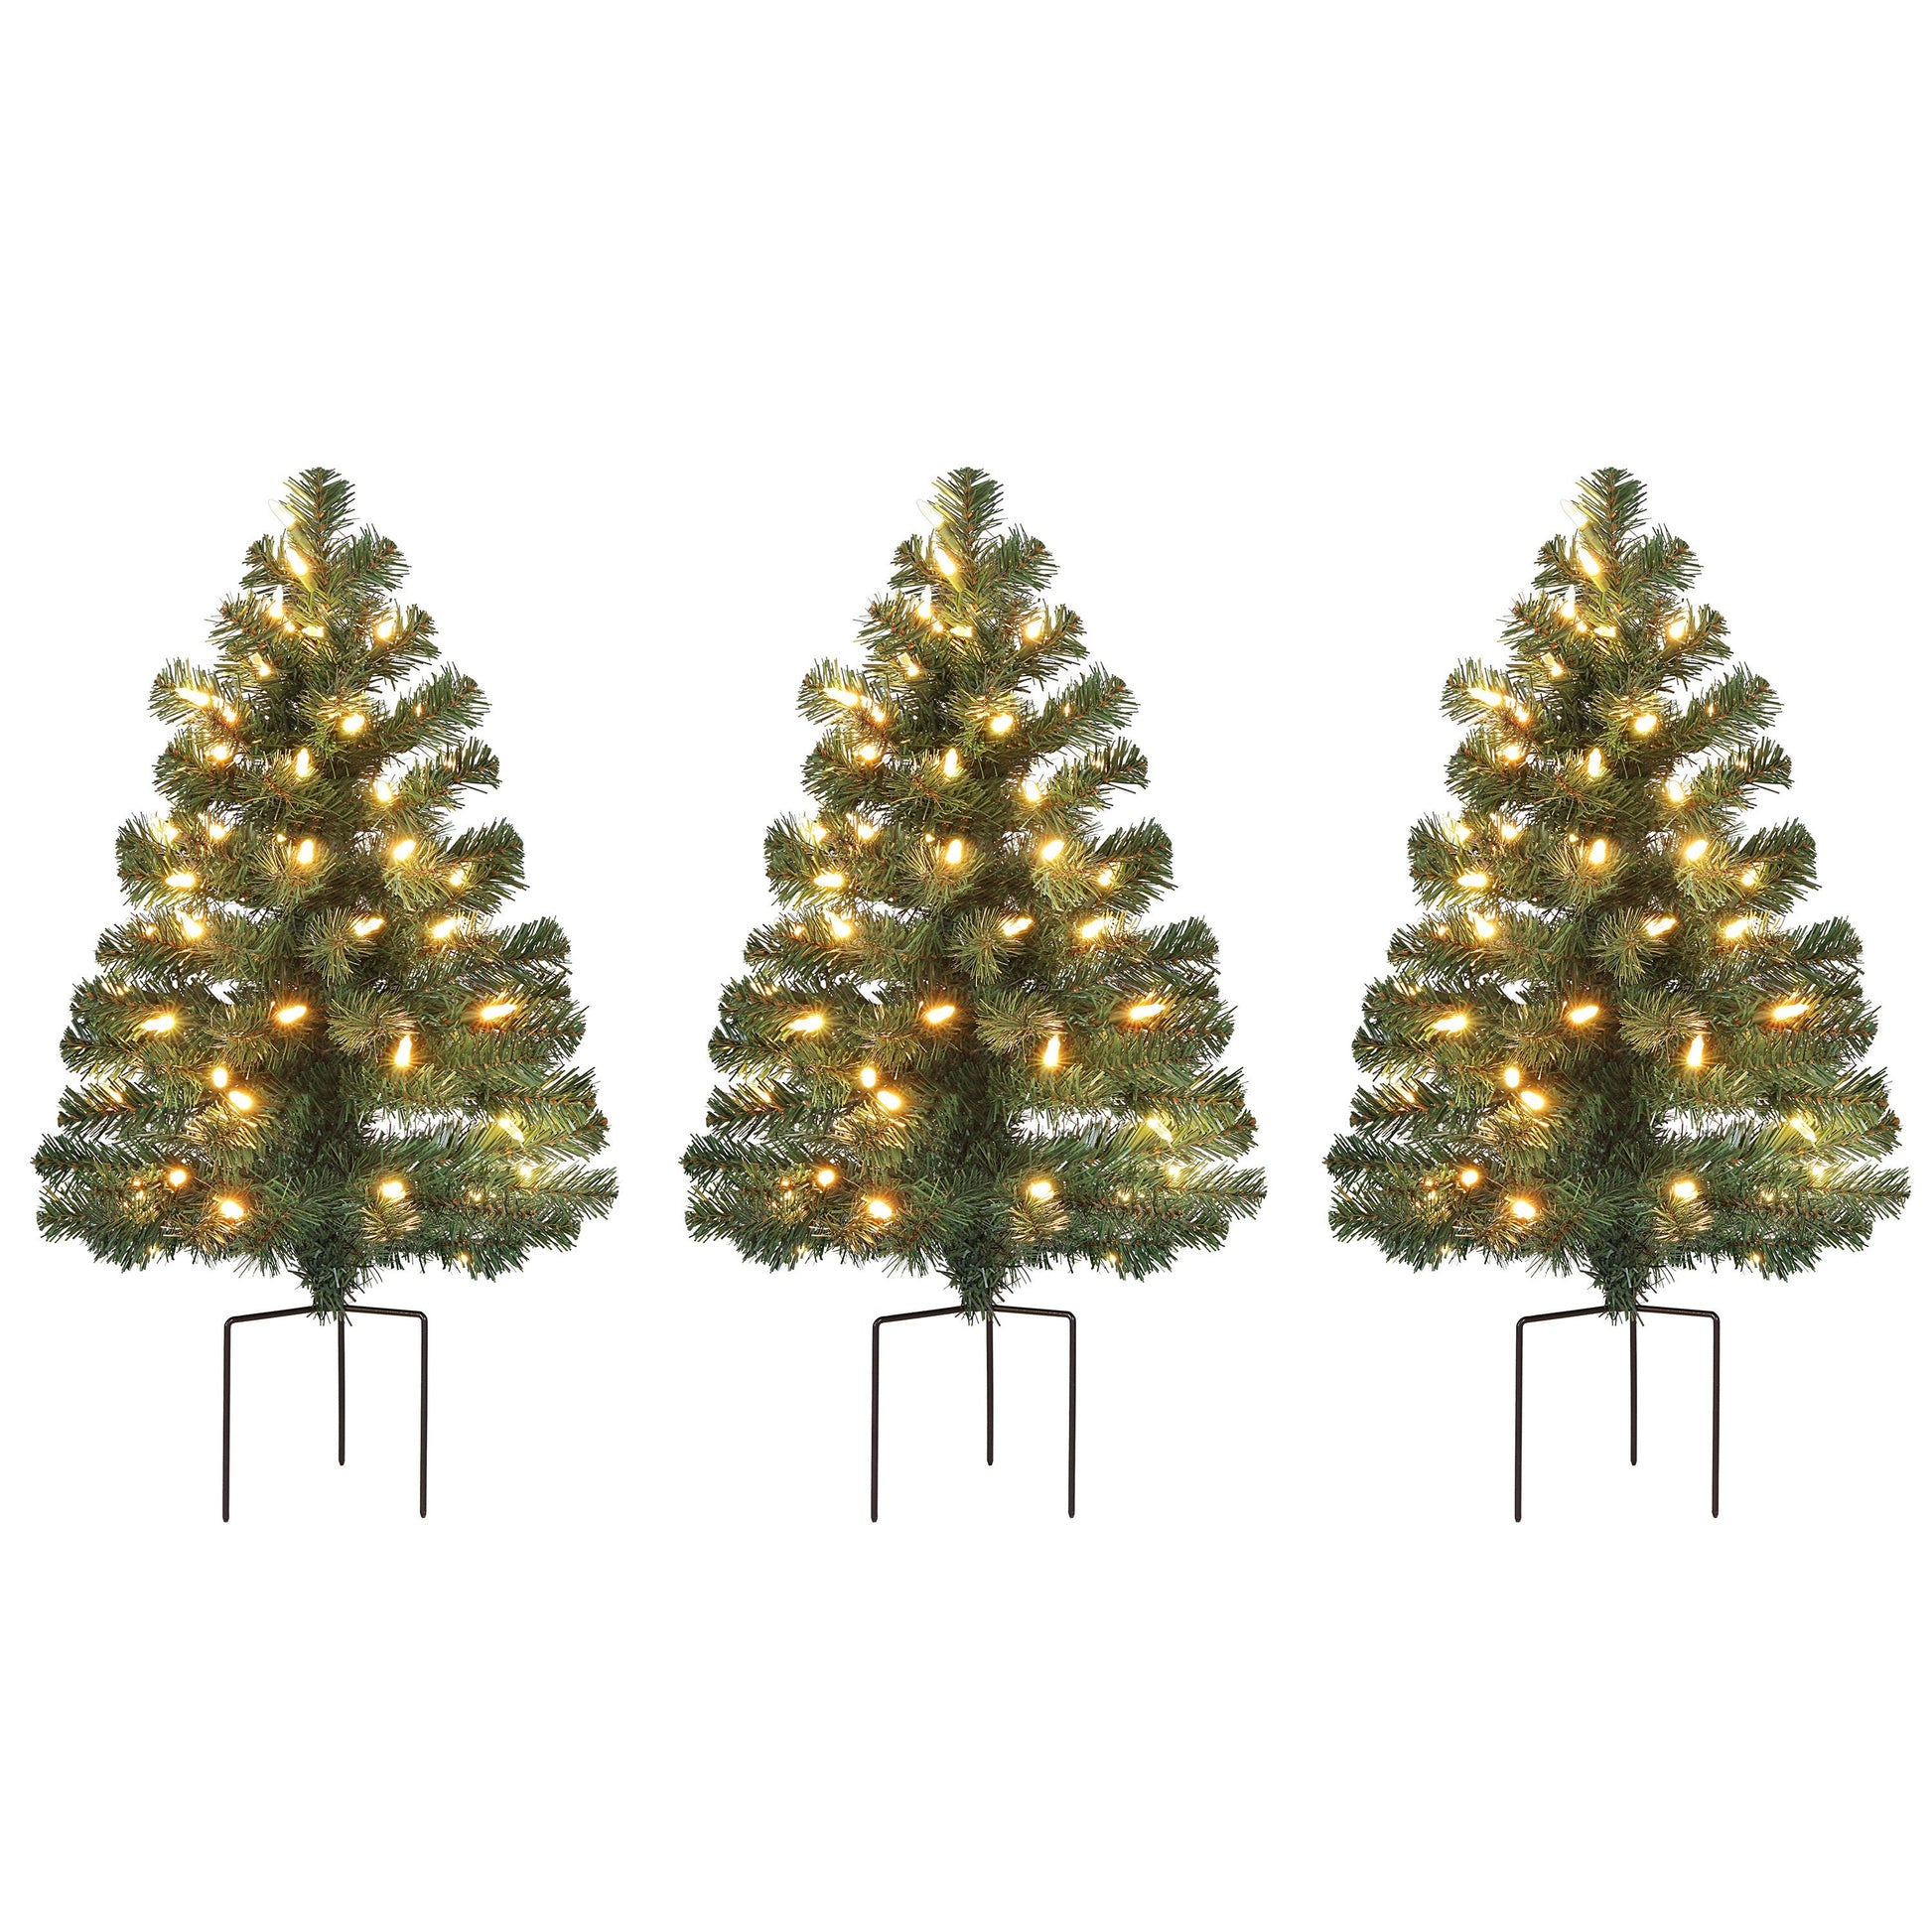 Alexa Enabled Pathway Christmas Trees - RGB Bulbs - Mr. Christmas